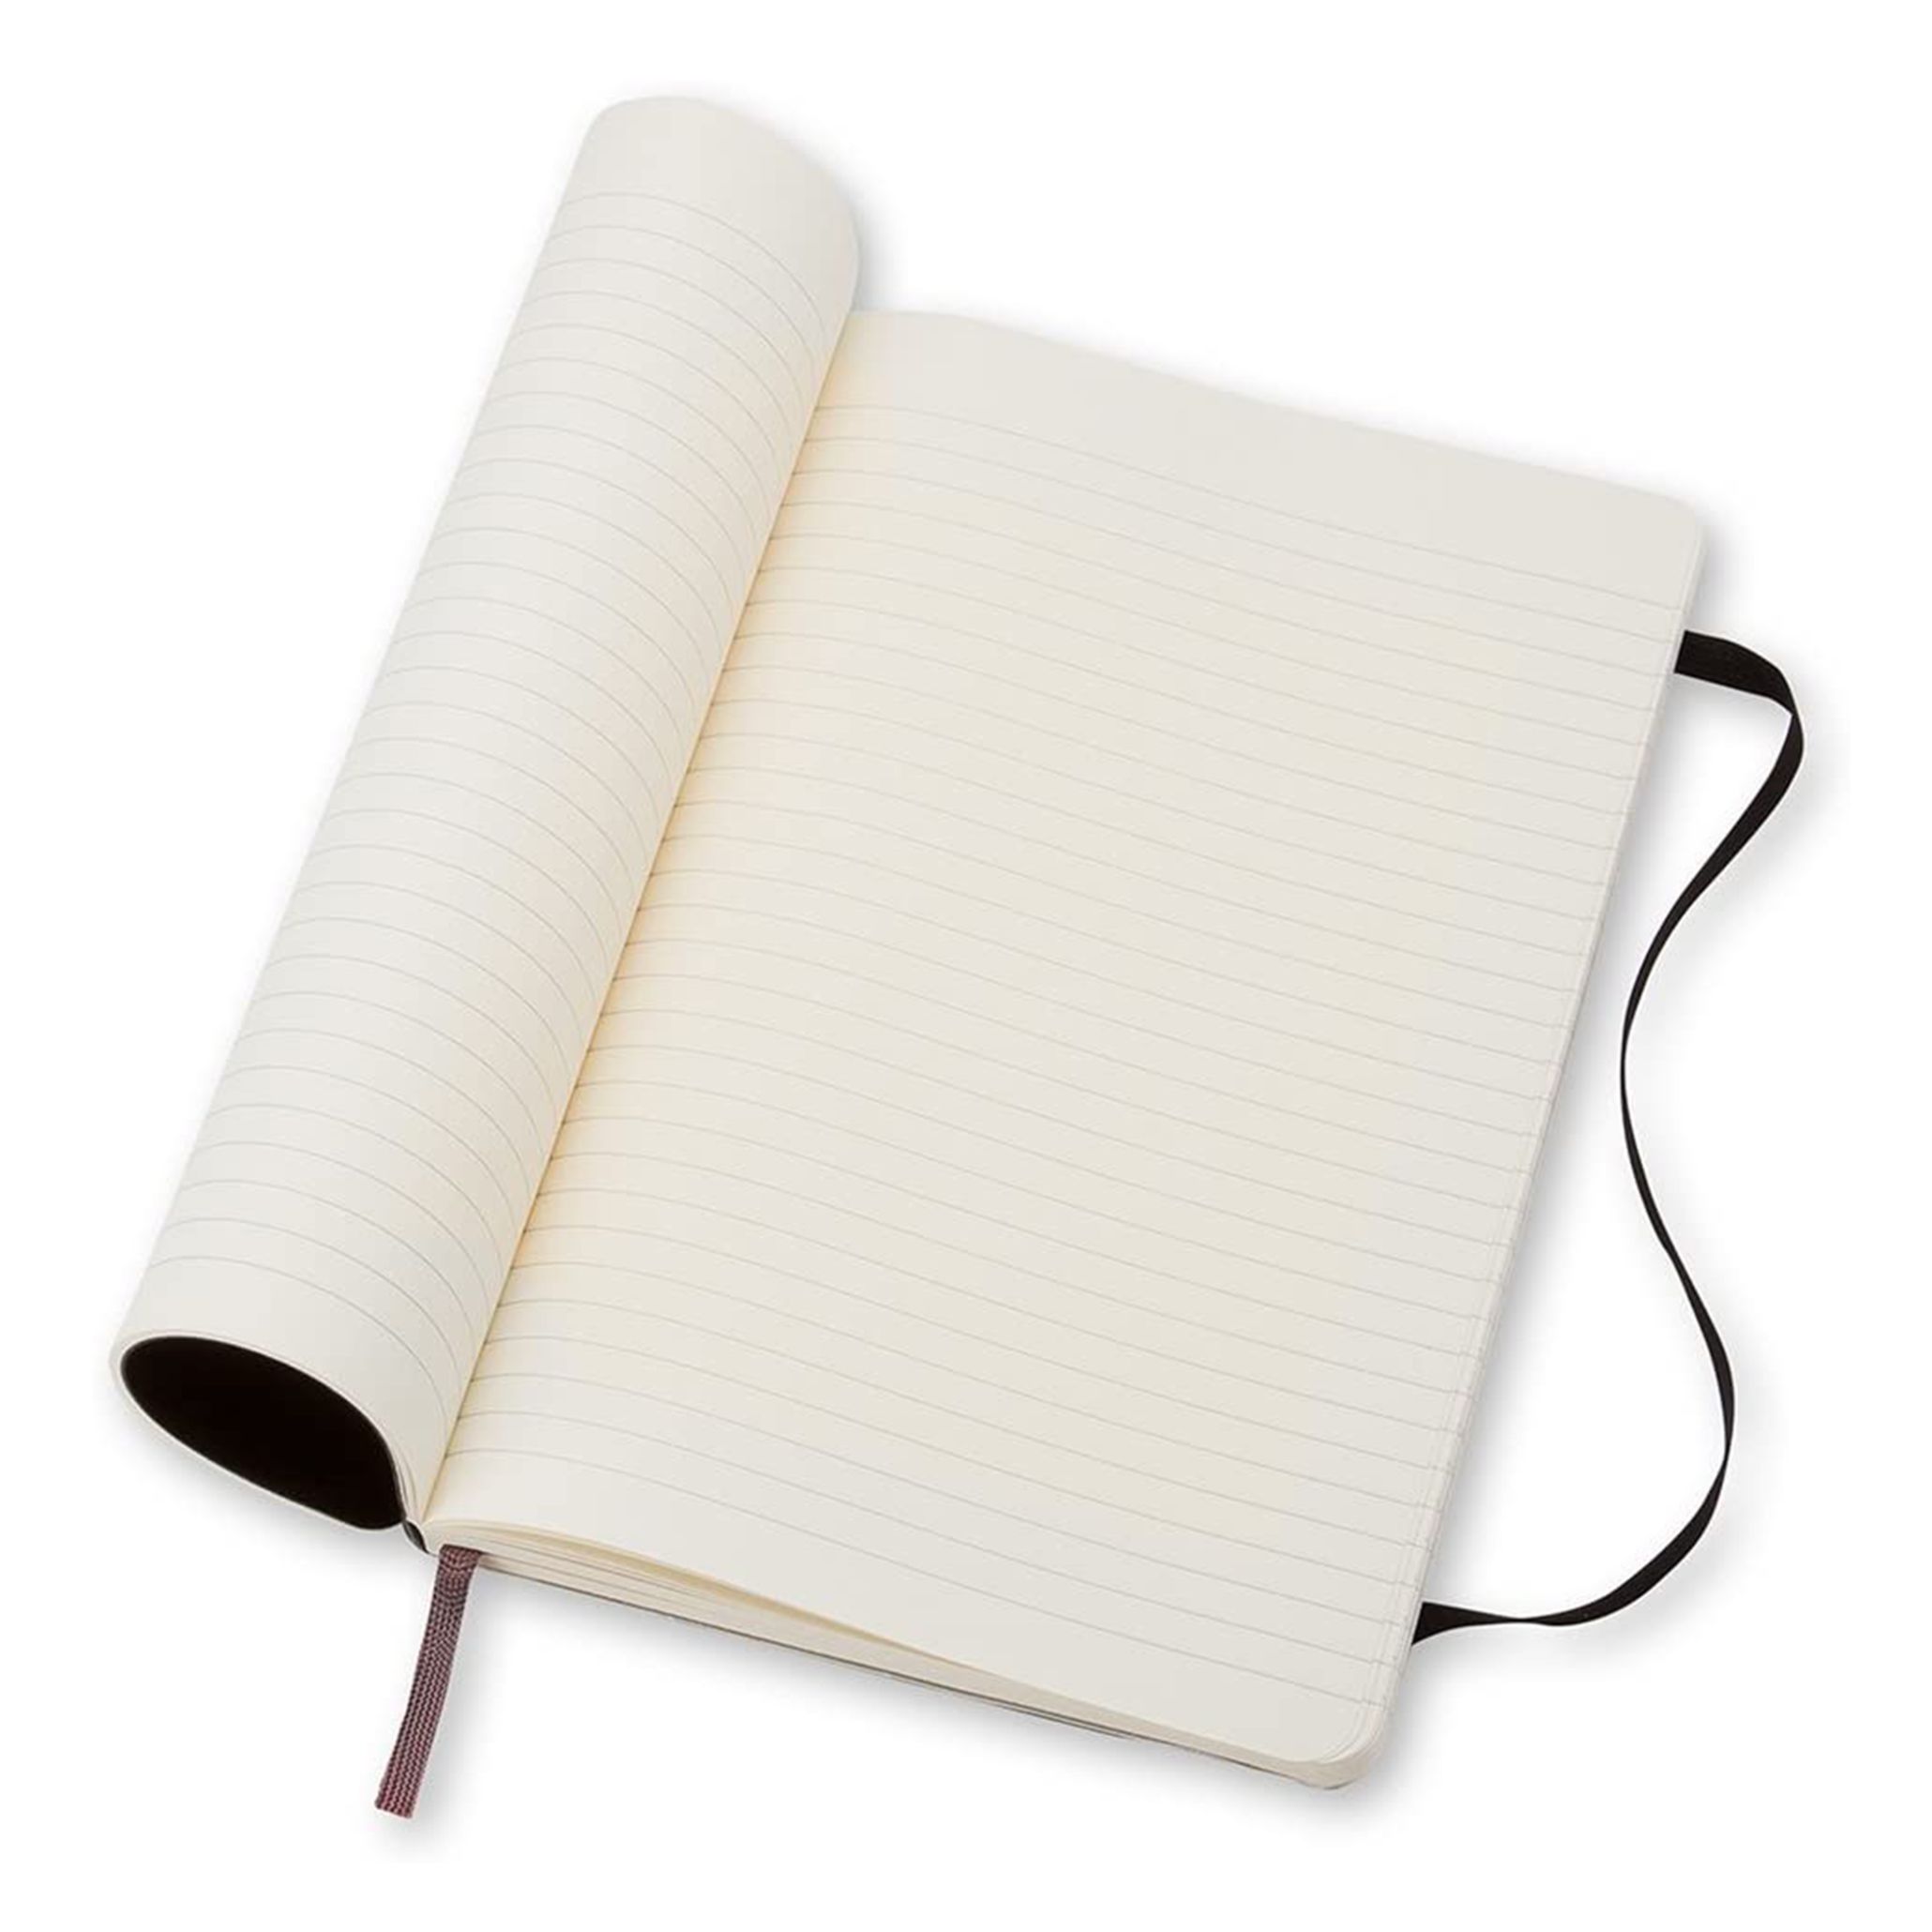 Moleskine Classic Notebook - Large (Black) - 3226 Online